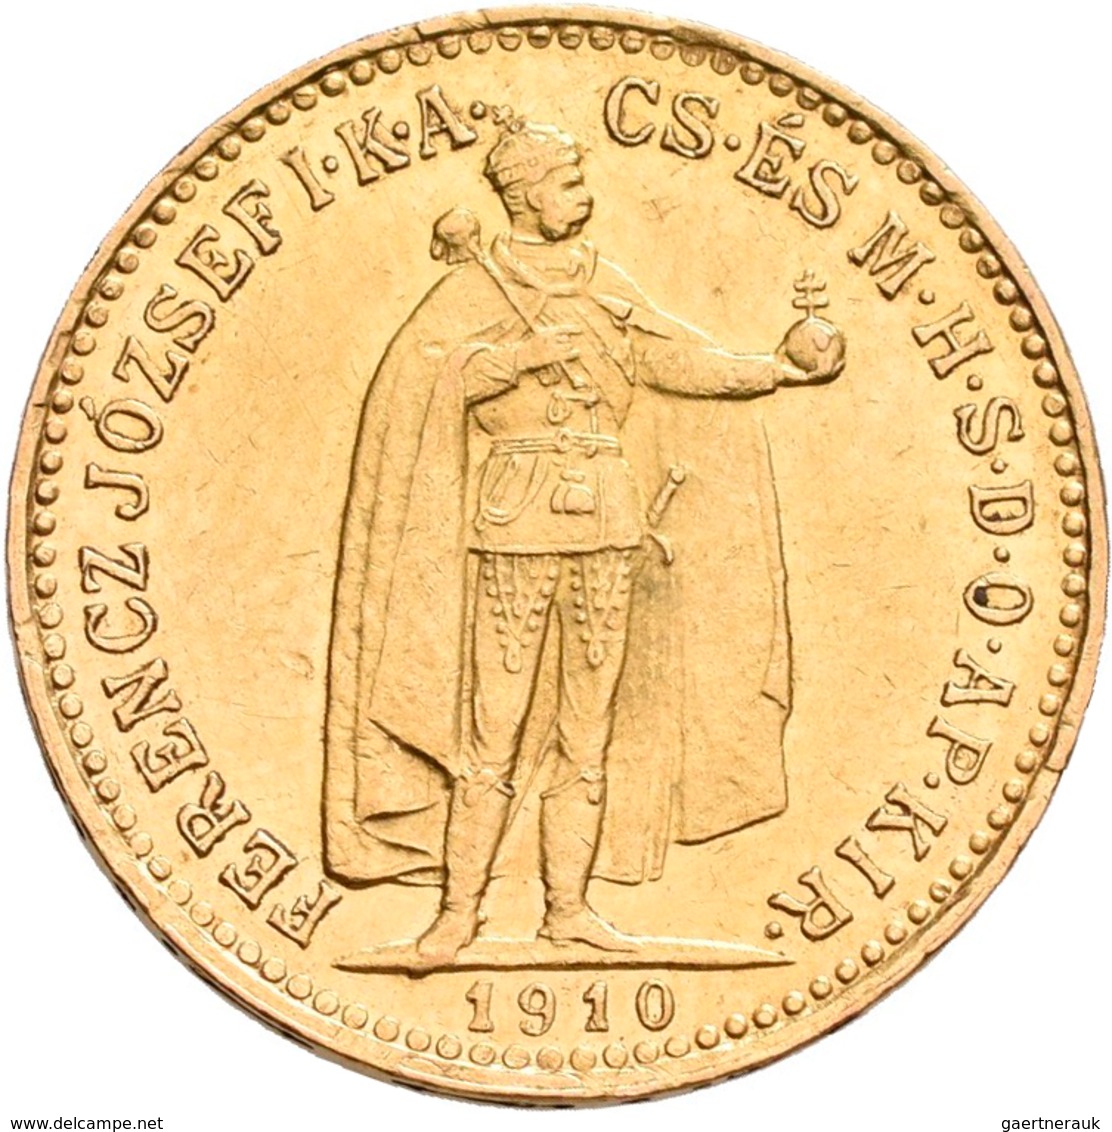 Ungarn - Anlagegold: Franz Joseph I. 1848-1916: 10 Kronen / Korona 1910, KM# 485, Friedberg 252. 3,3 - Ungarn